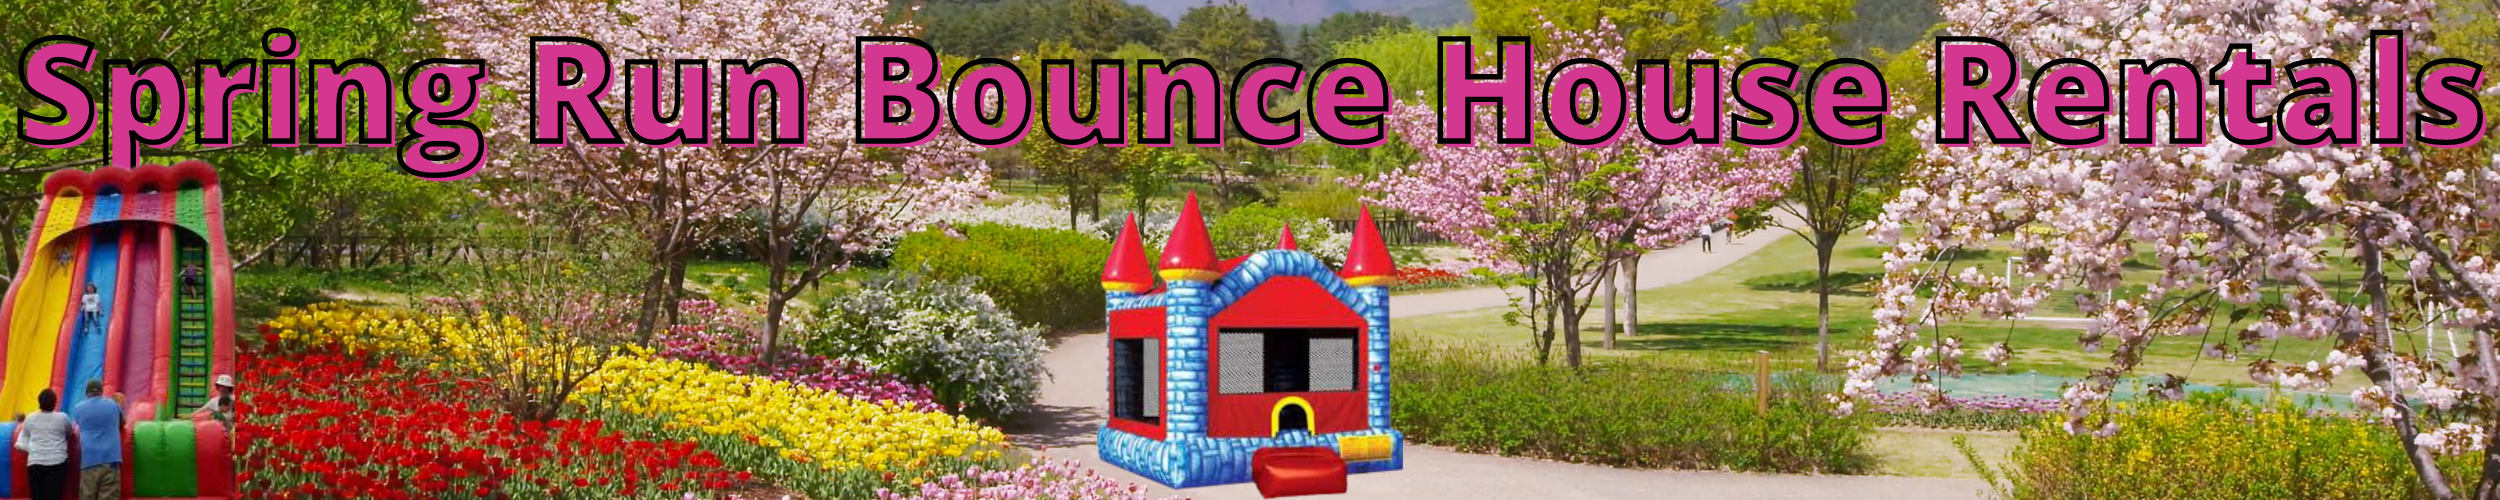 Spring Run Bounce House Rentals